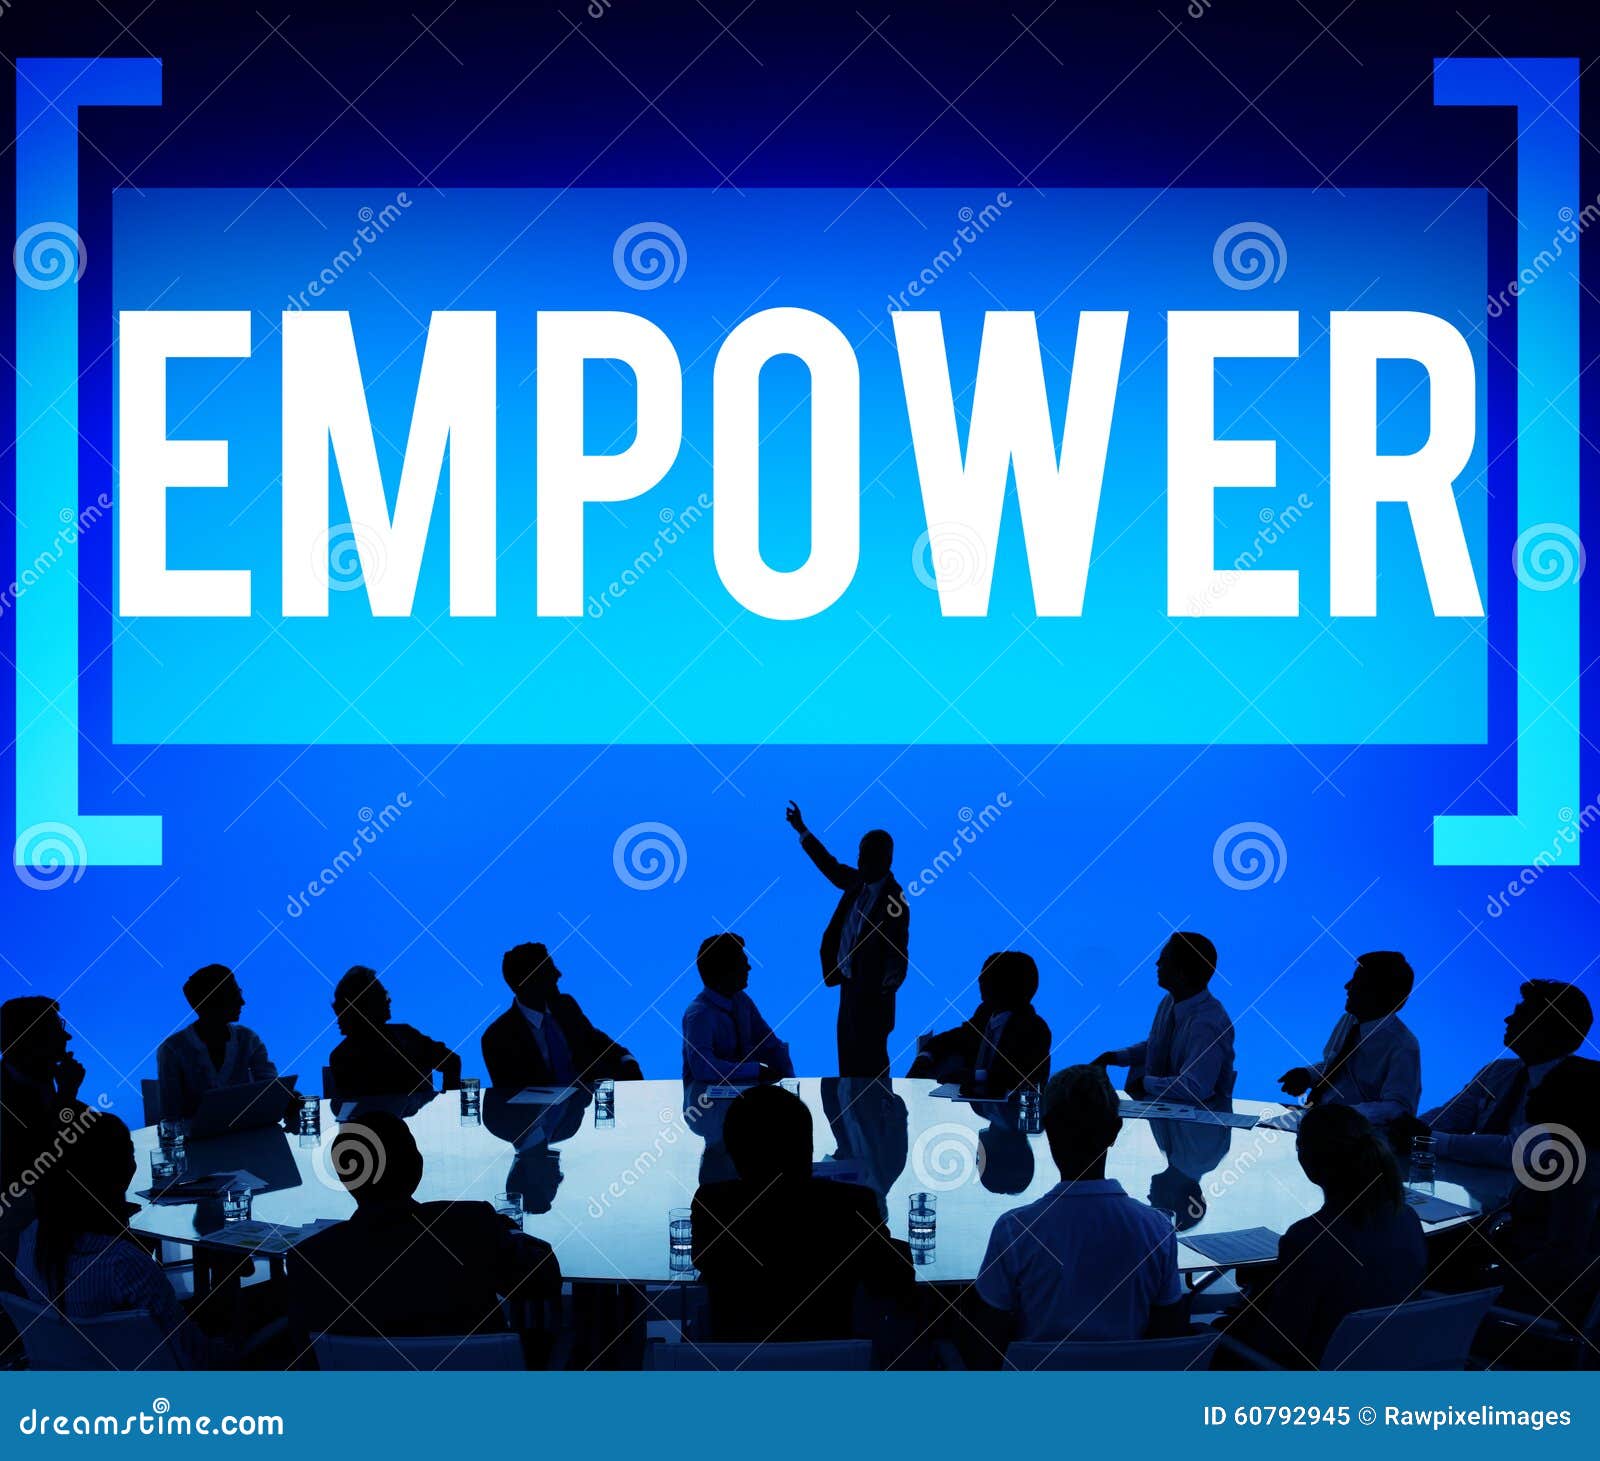 empower authority permission empowerment enhance concept